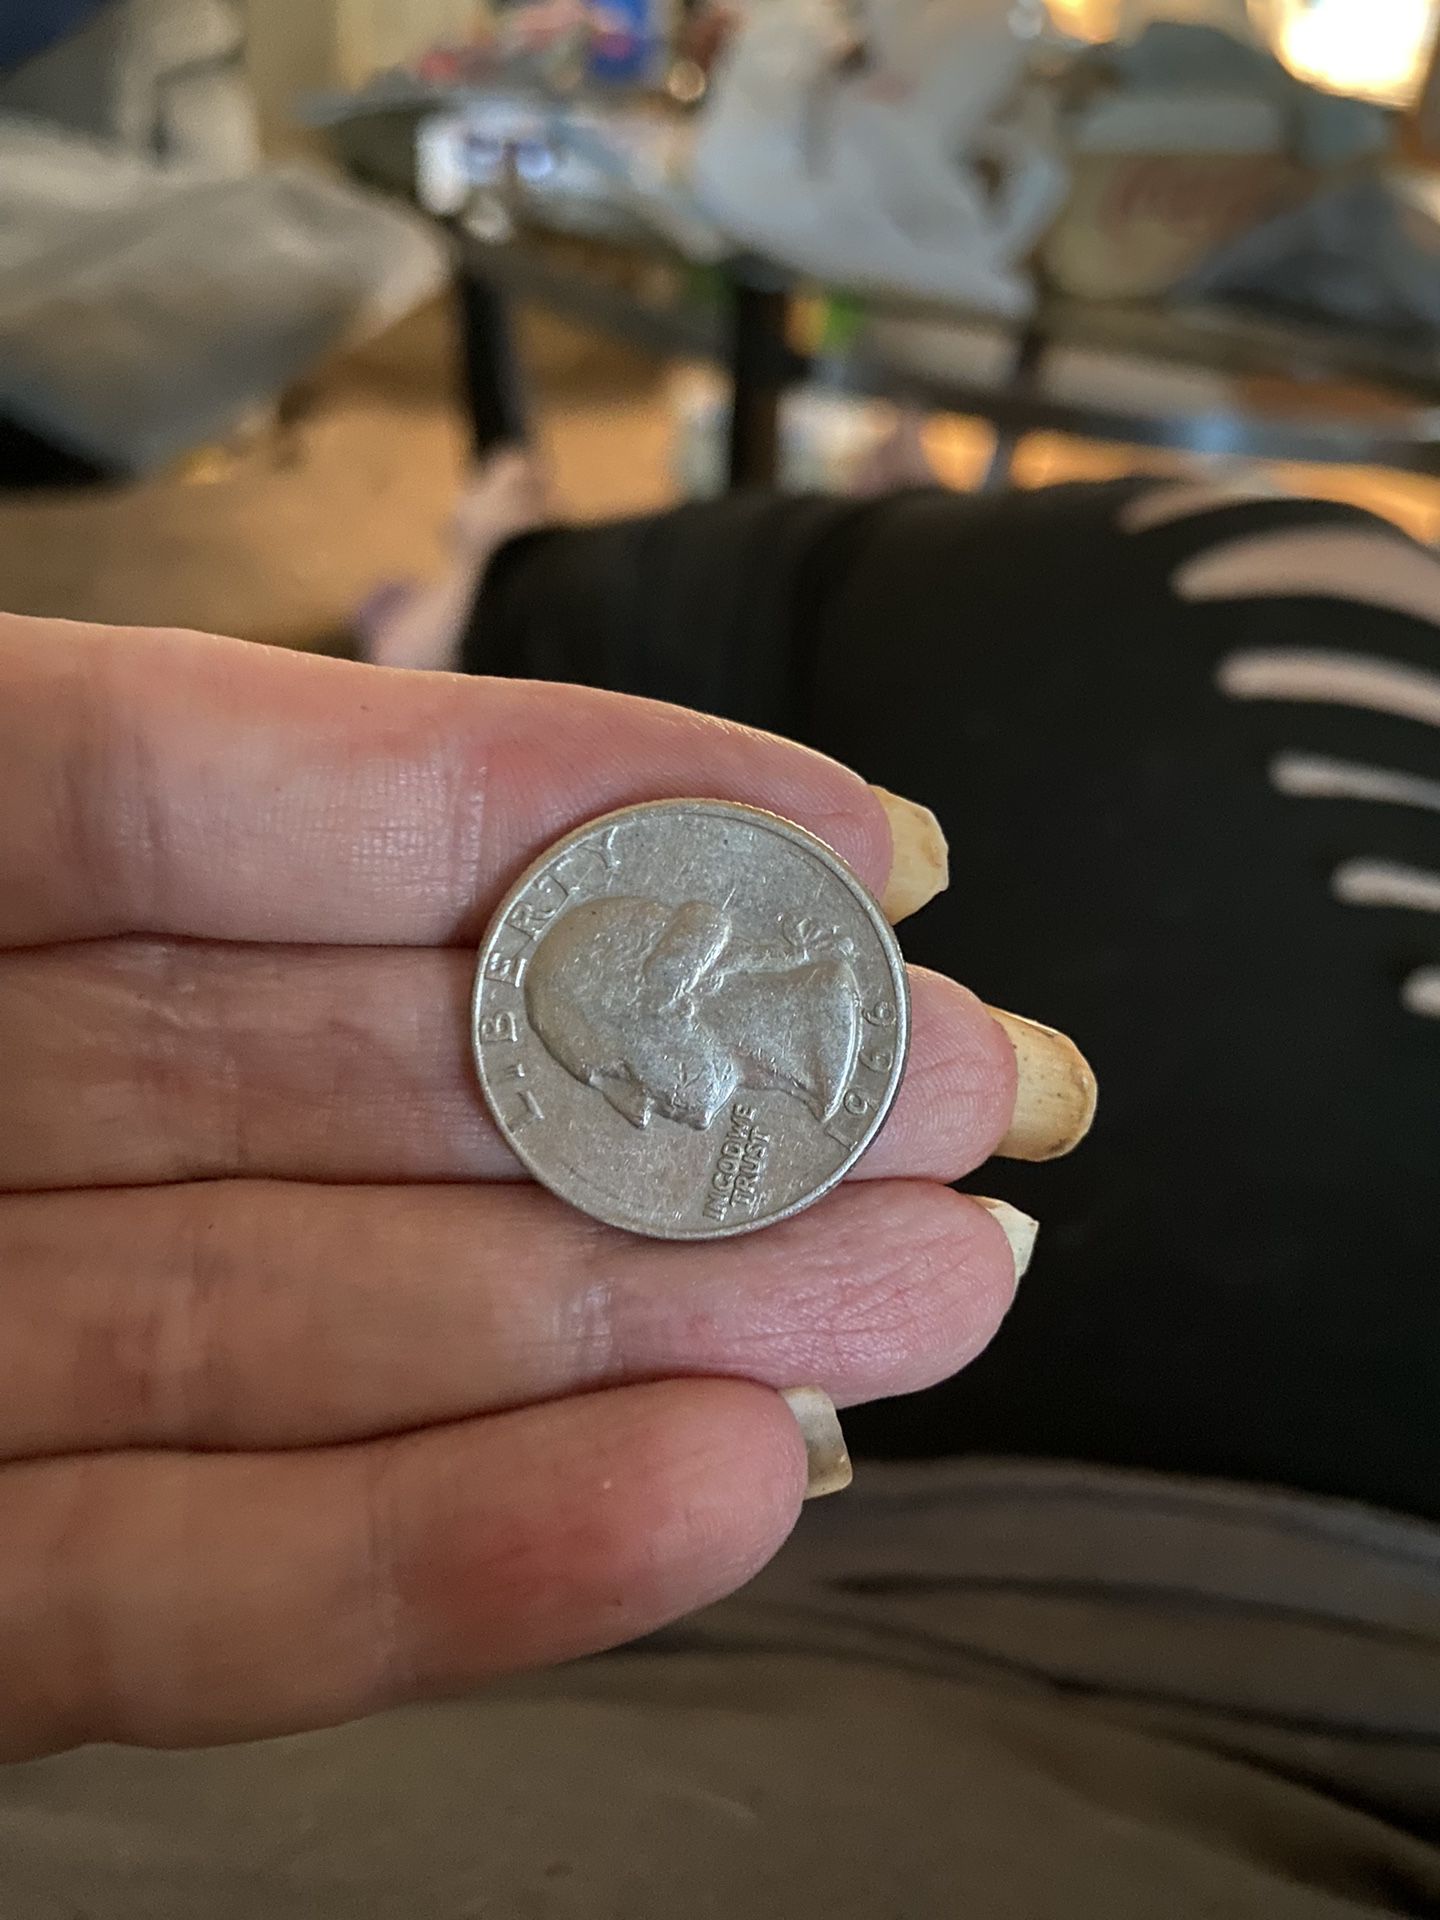 1966 Quarter With No Mint Mark Error 